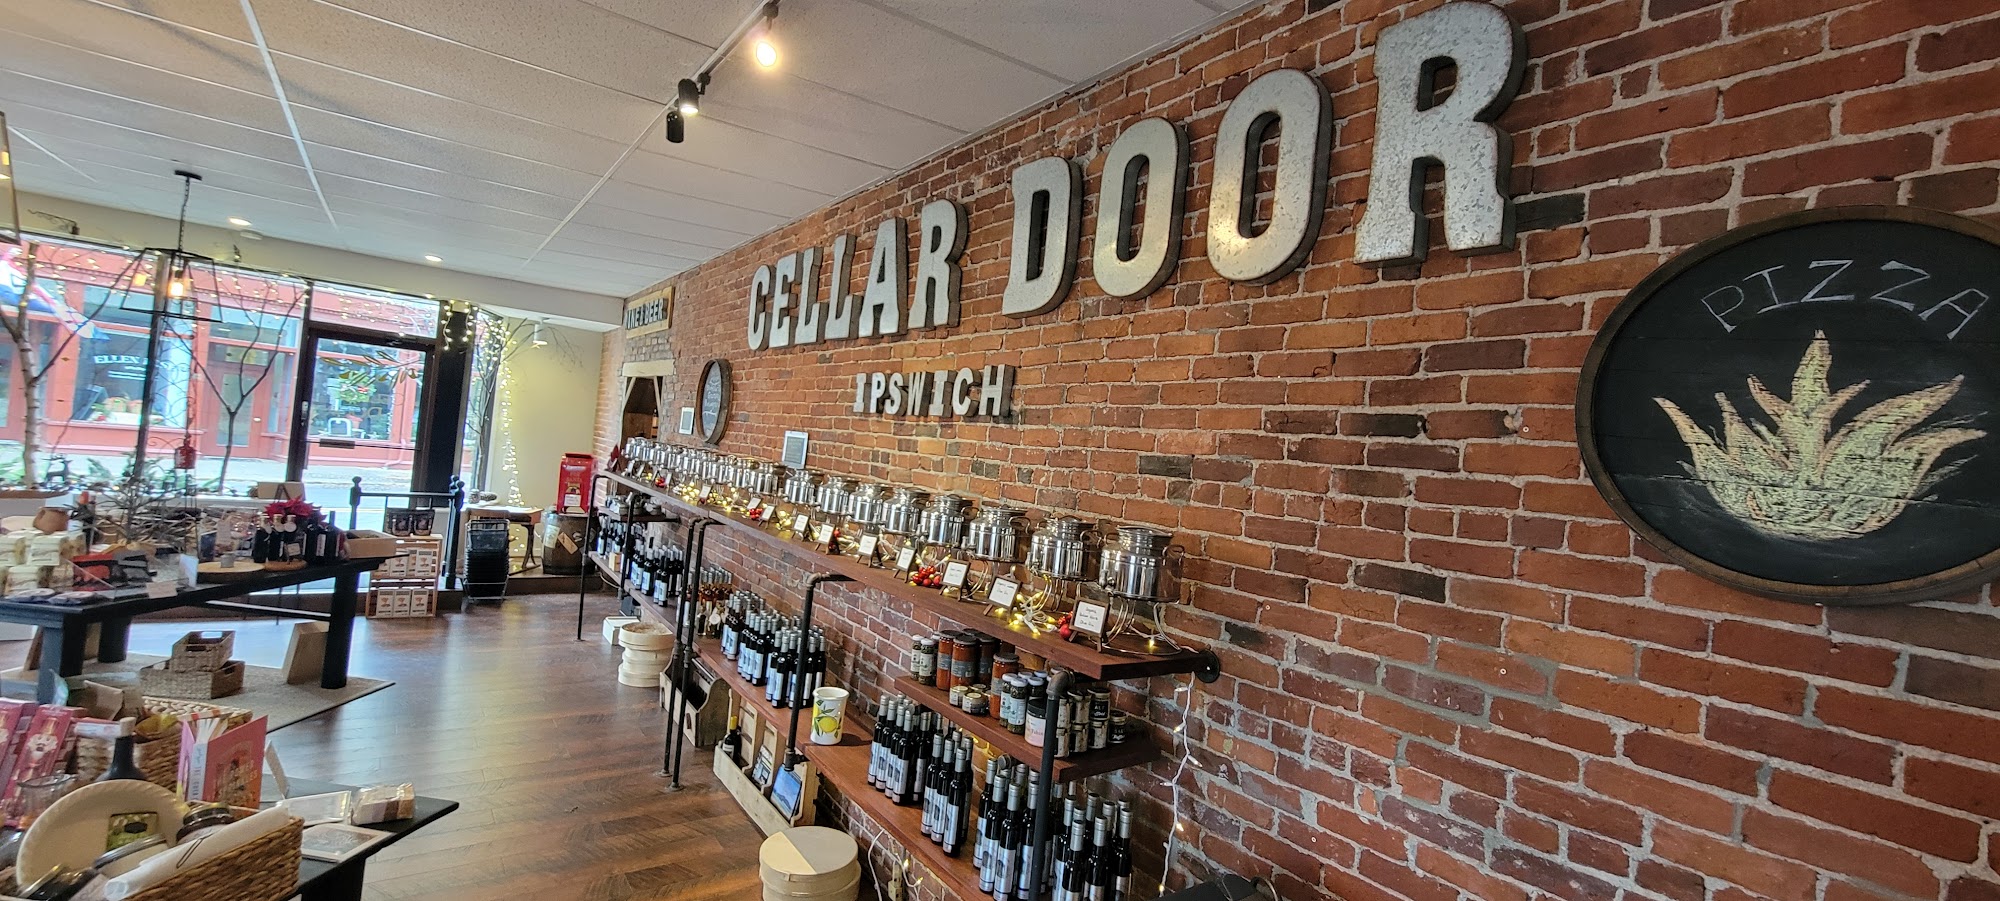 Cellar Door Culinary, Wine (including natural/biodynamic) & Craft Beer